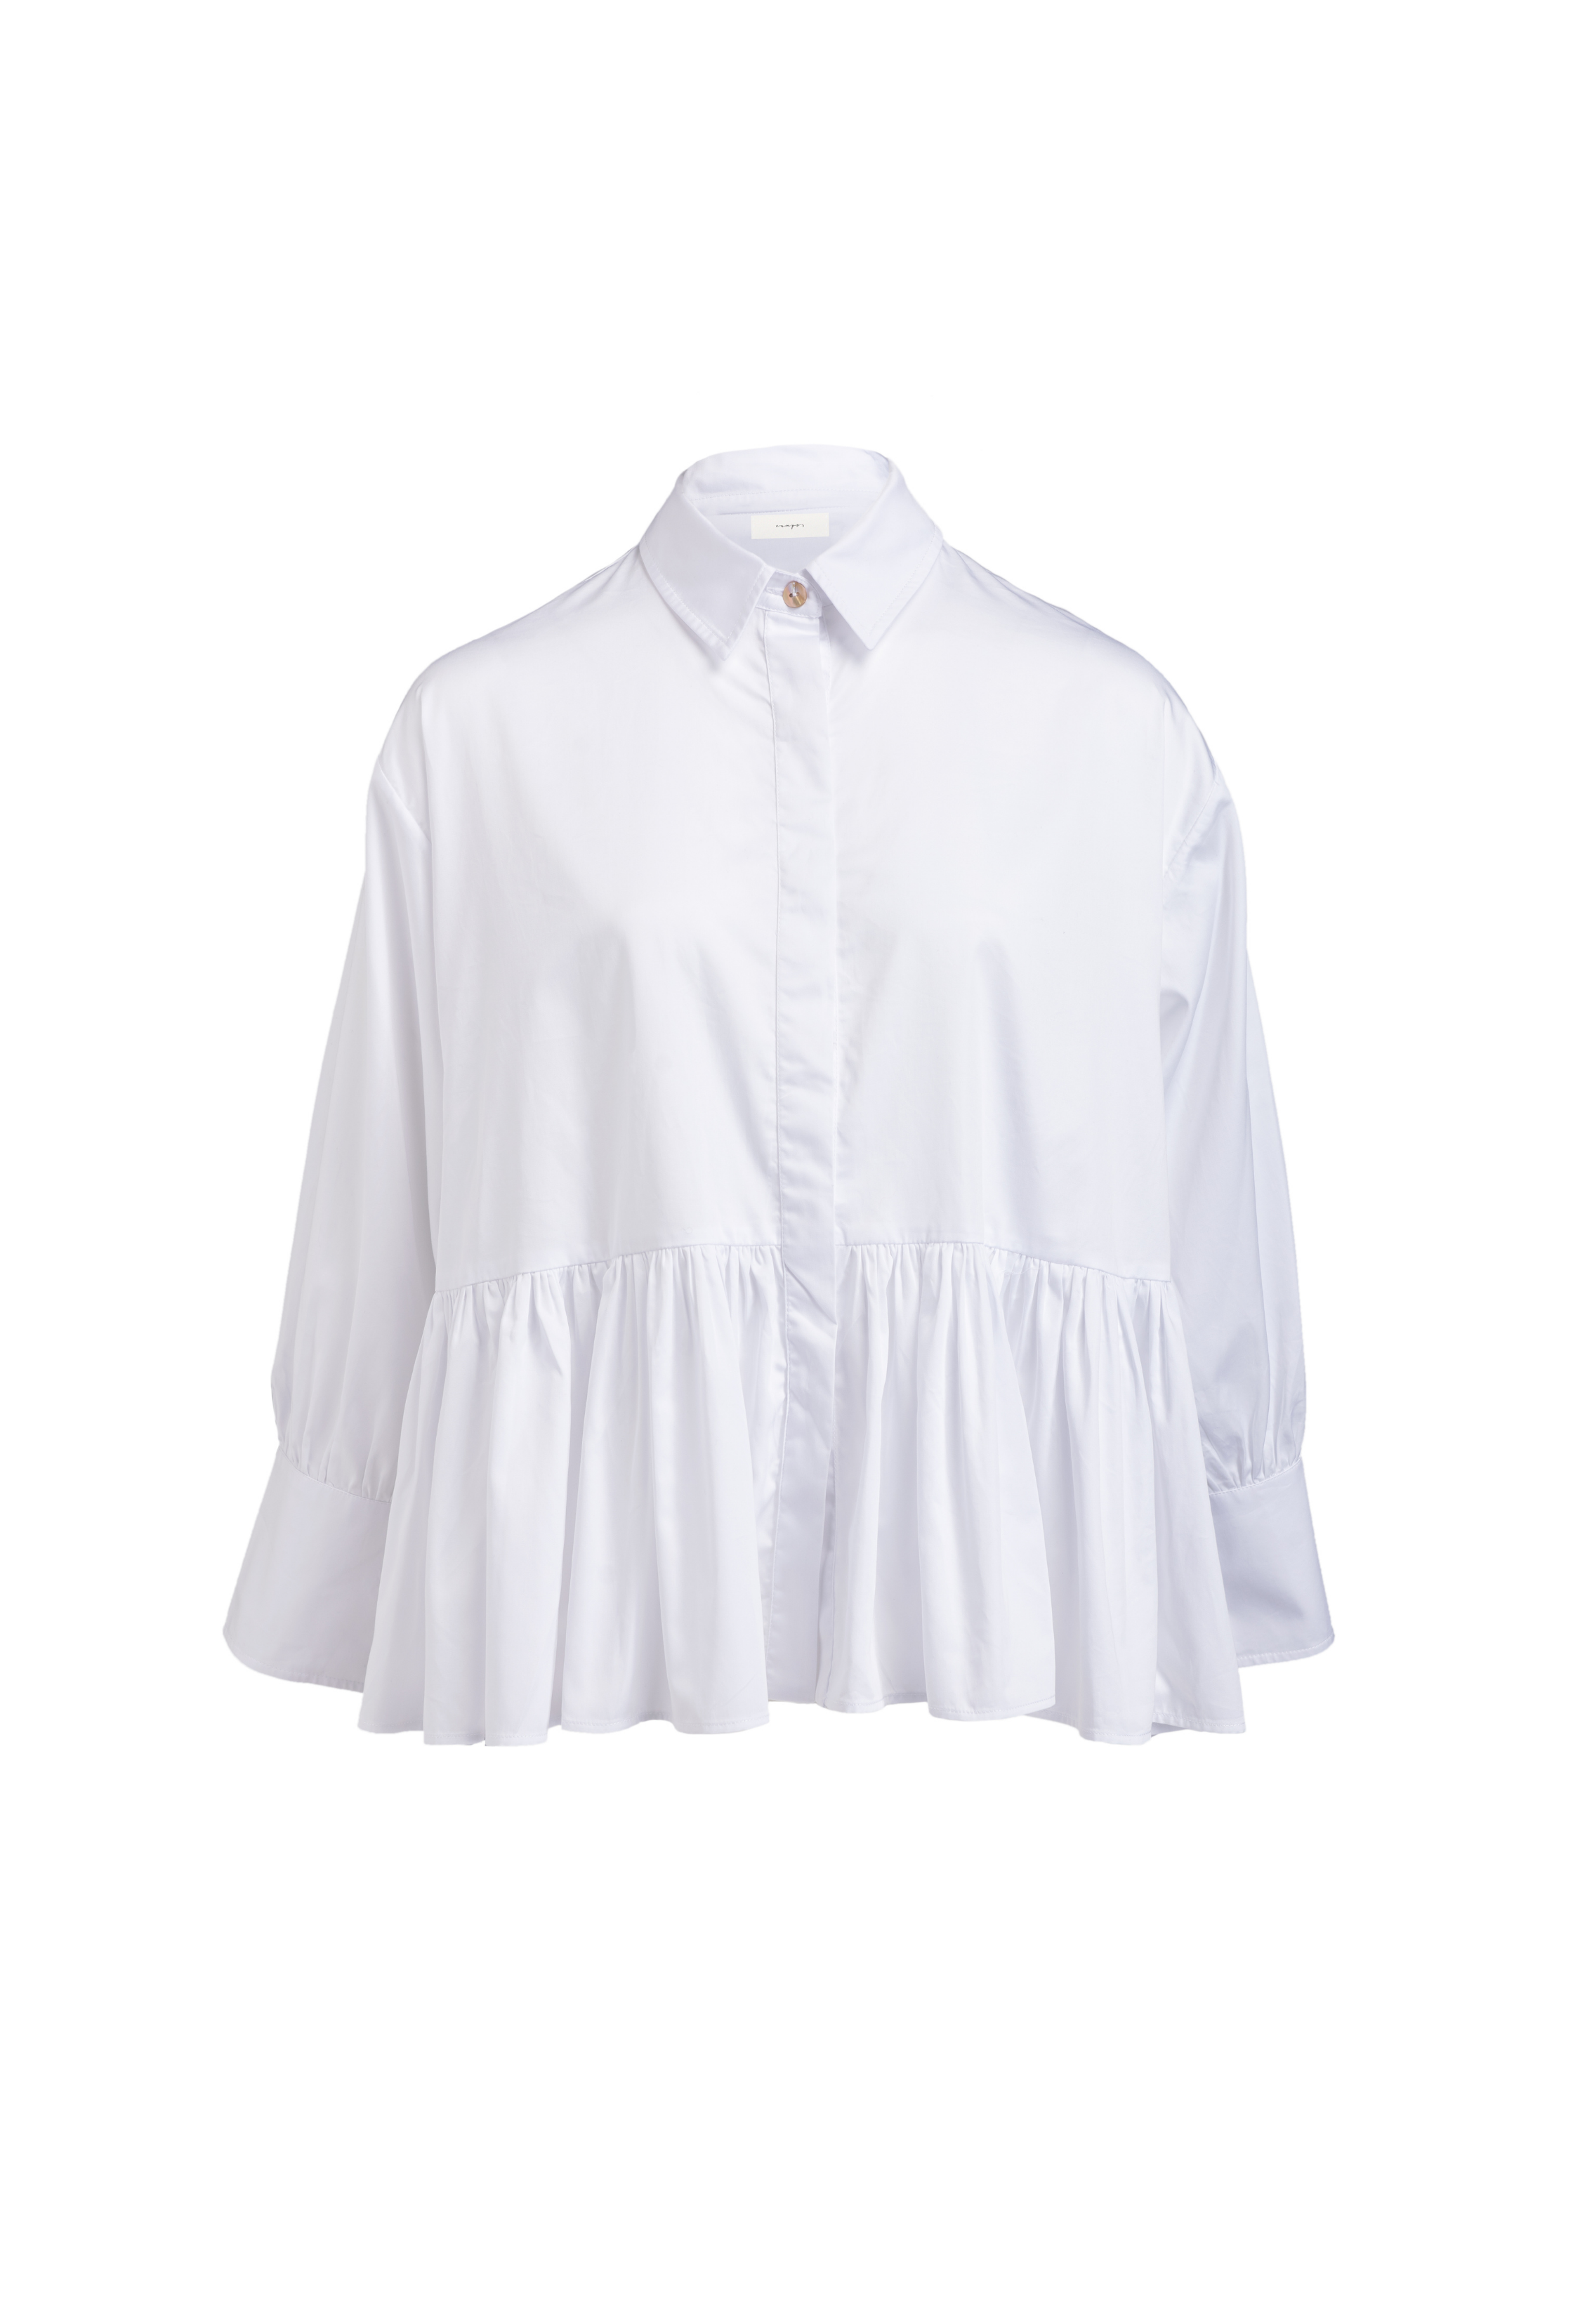 AUDREY Shirt White